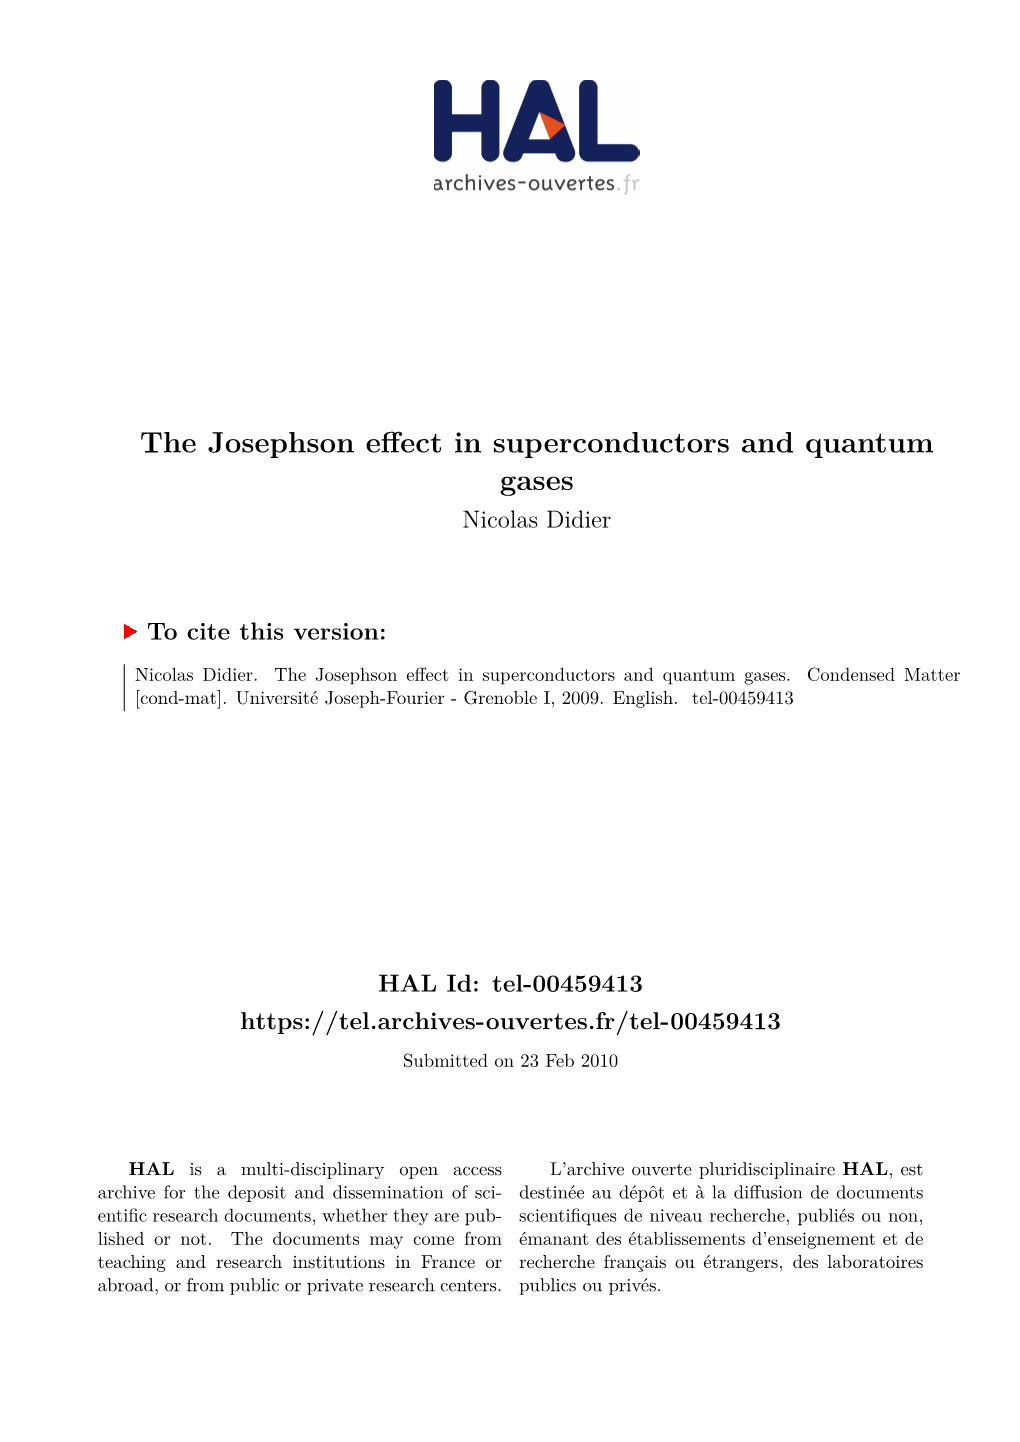 The Josephson Effect in Superconductors and Quantum Gases Nicolas Didier